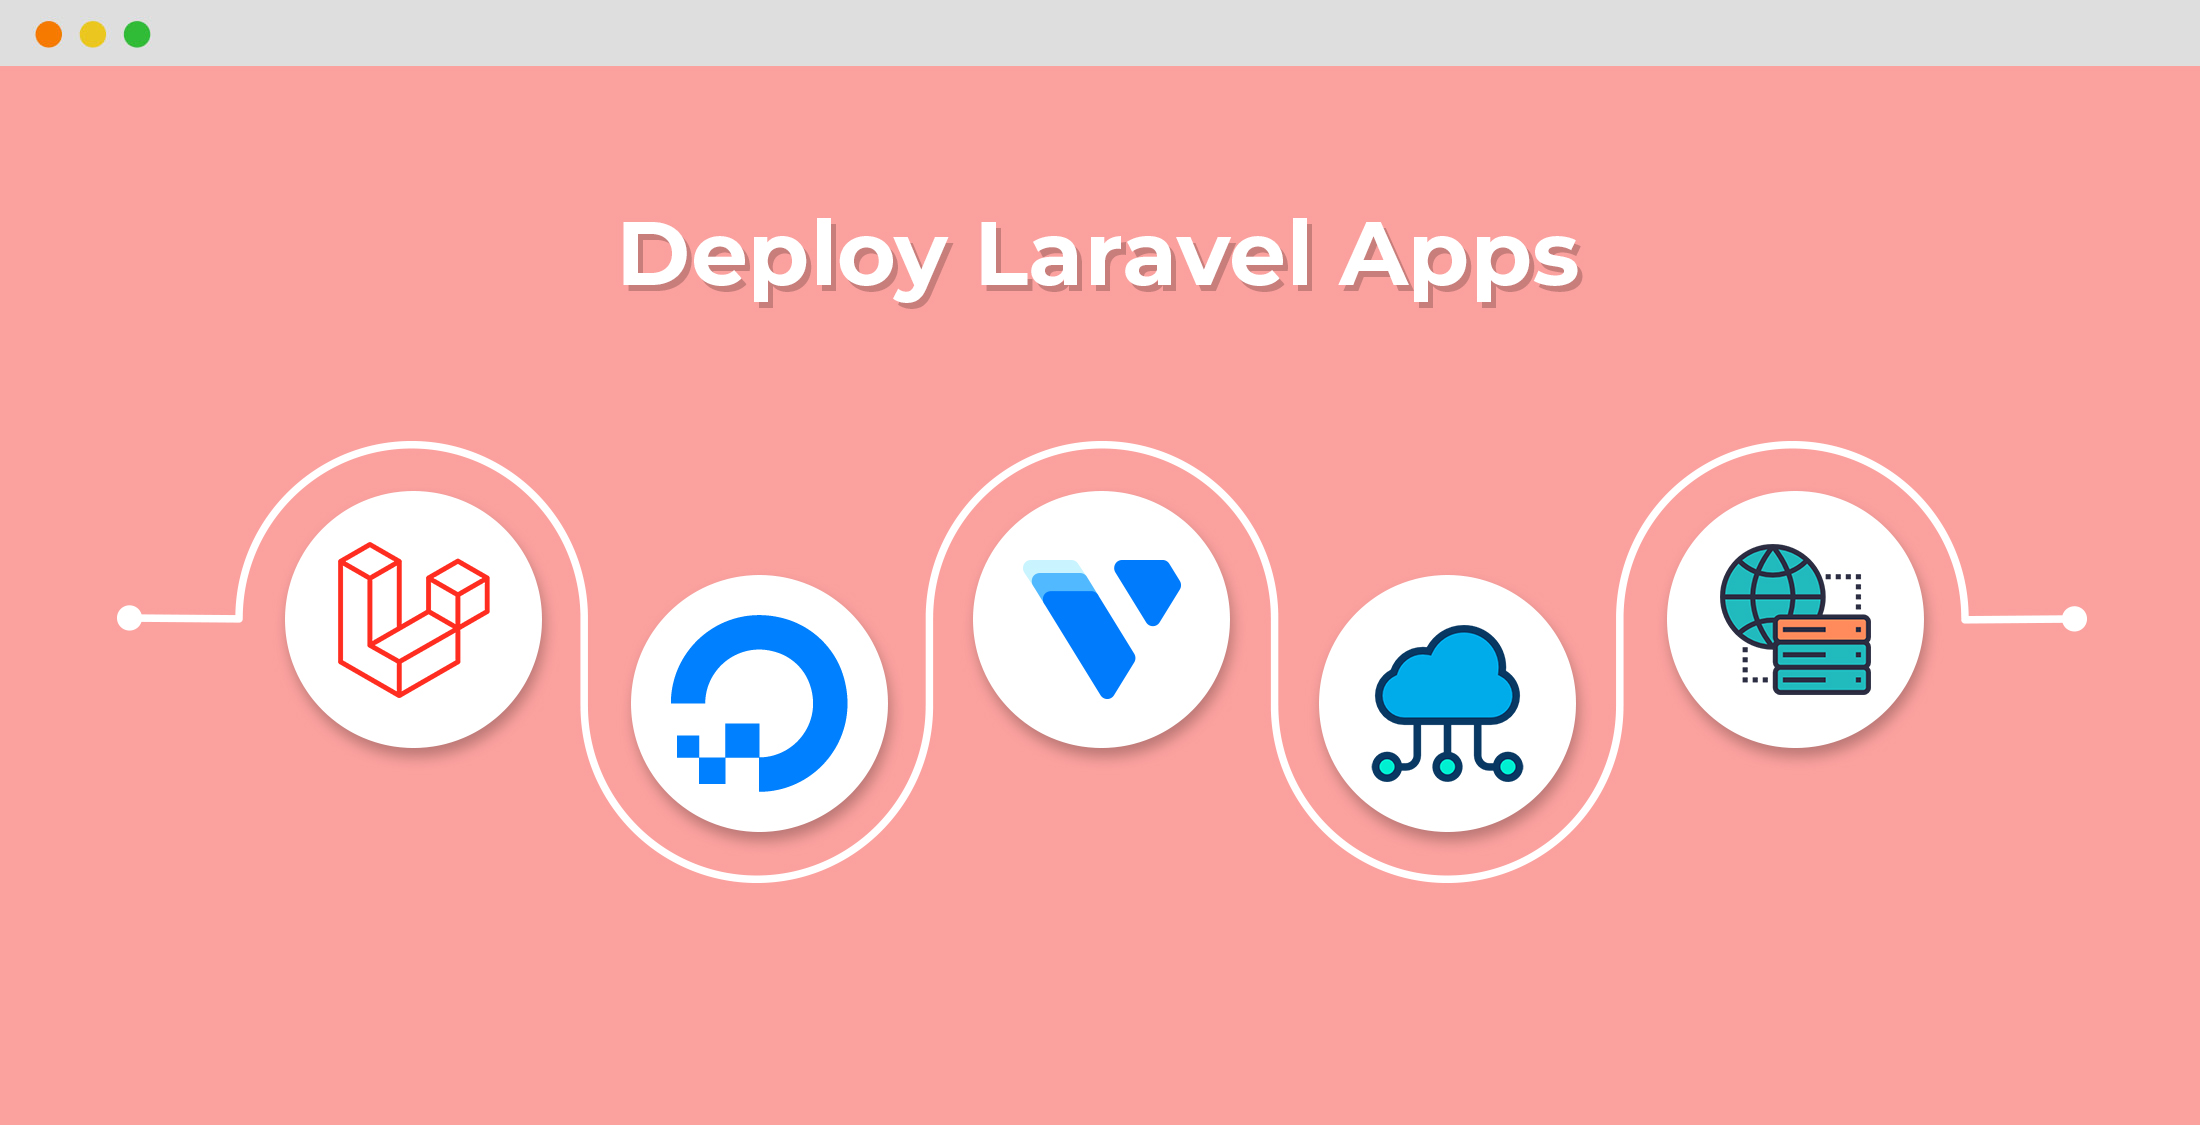 Deploy Laravel Apps